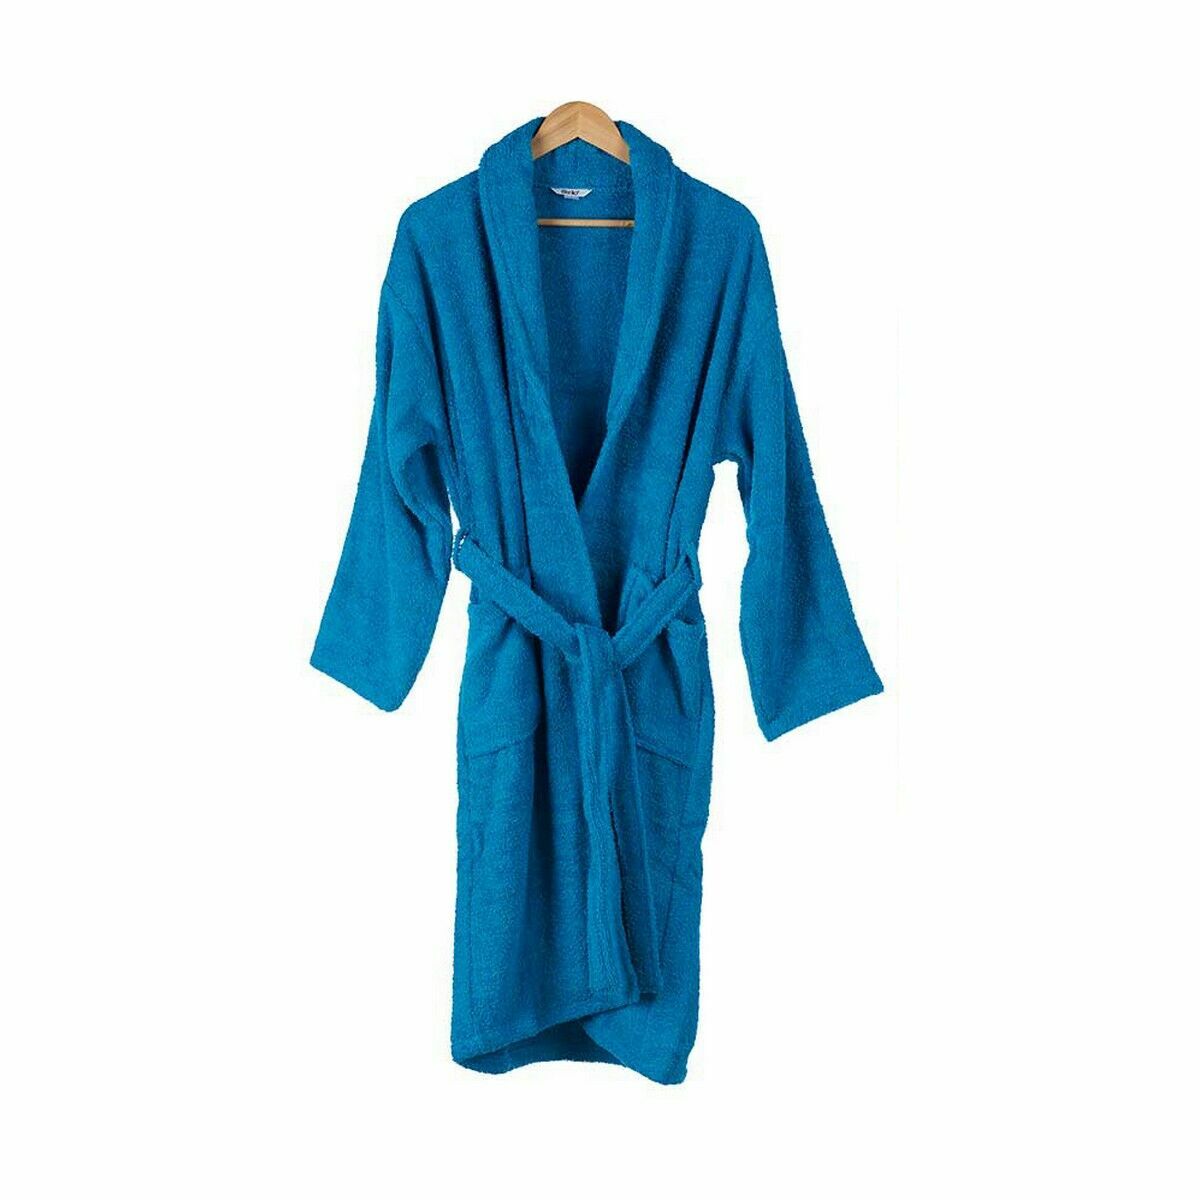 Dressing Gown M/L Blue (6 Units)